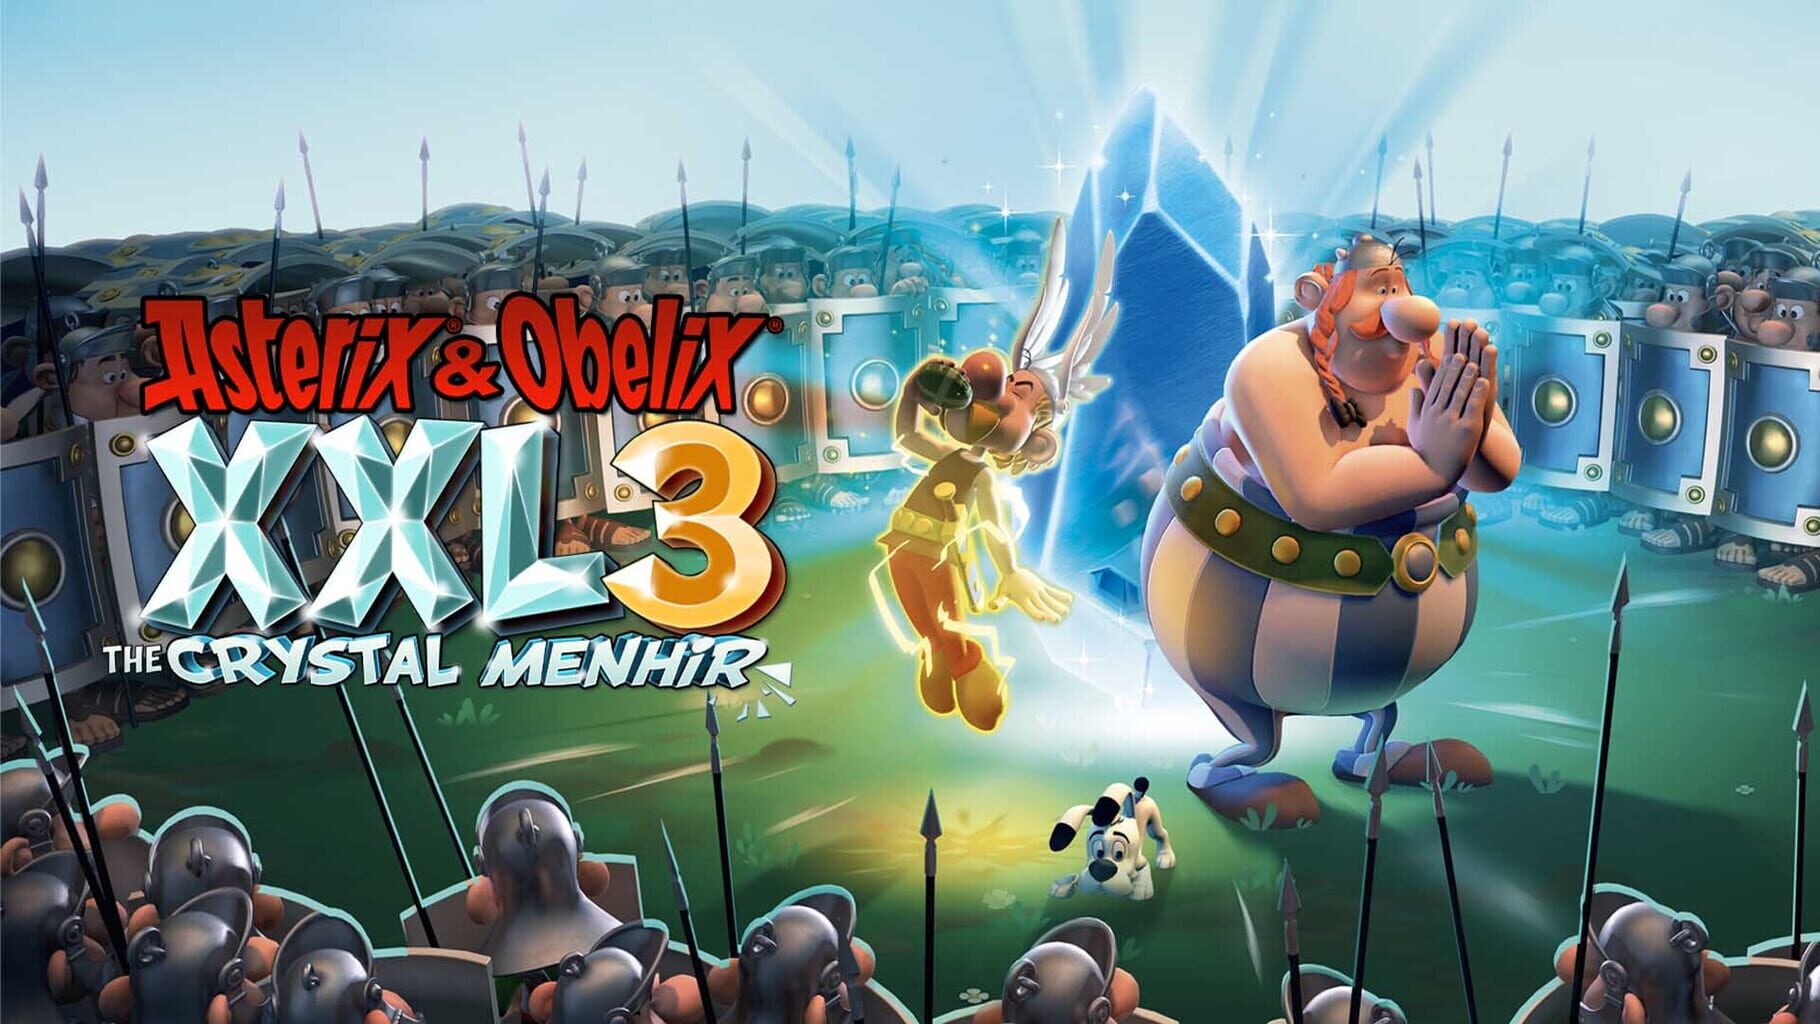 Asterix & Obelix XXL 3: The Crystal Menhir artwork